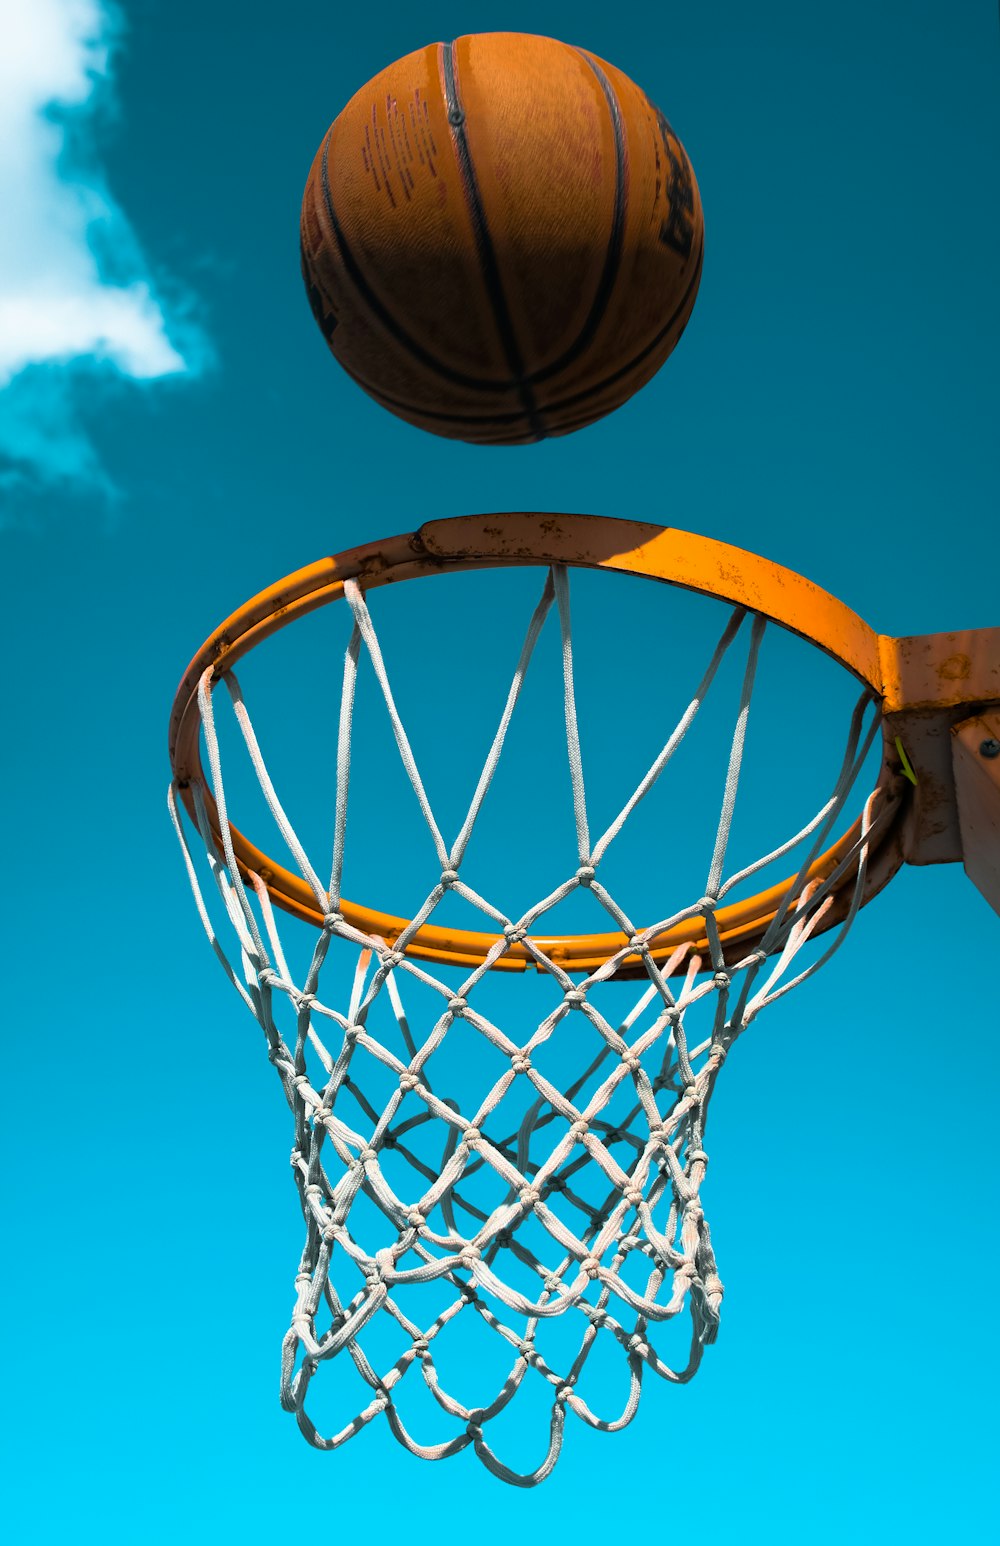 Brown basketball near ring photo – Free Basketball Image on Unsplash